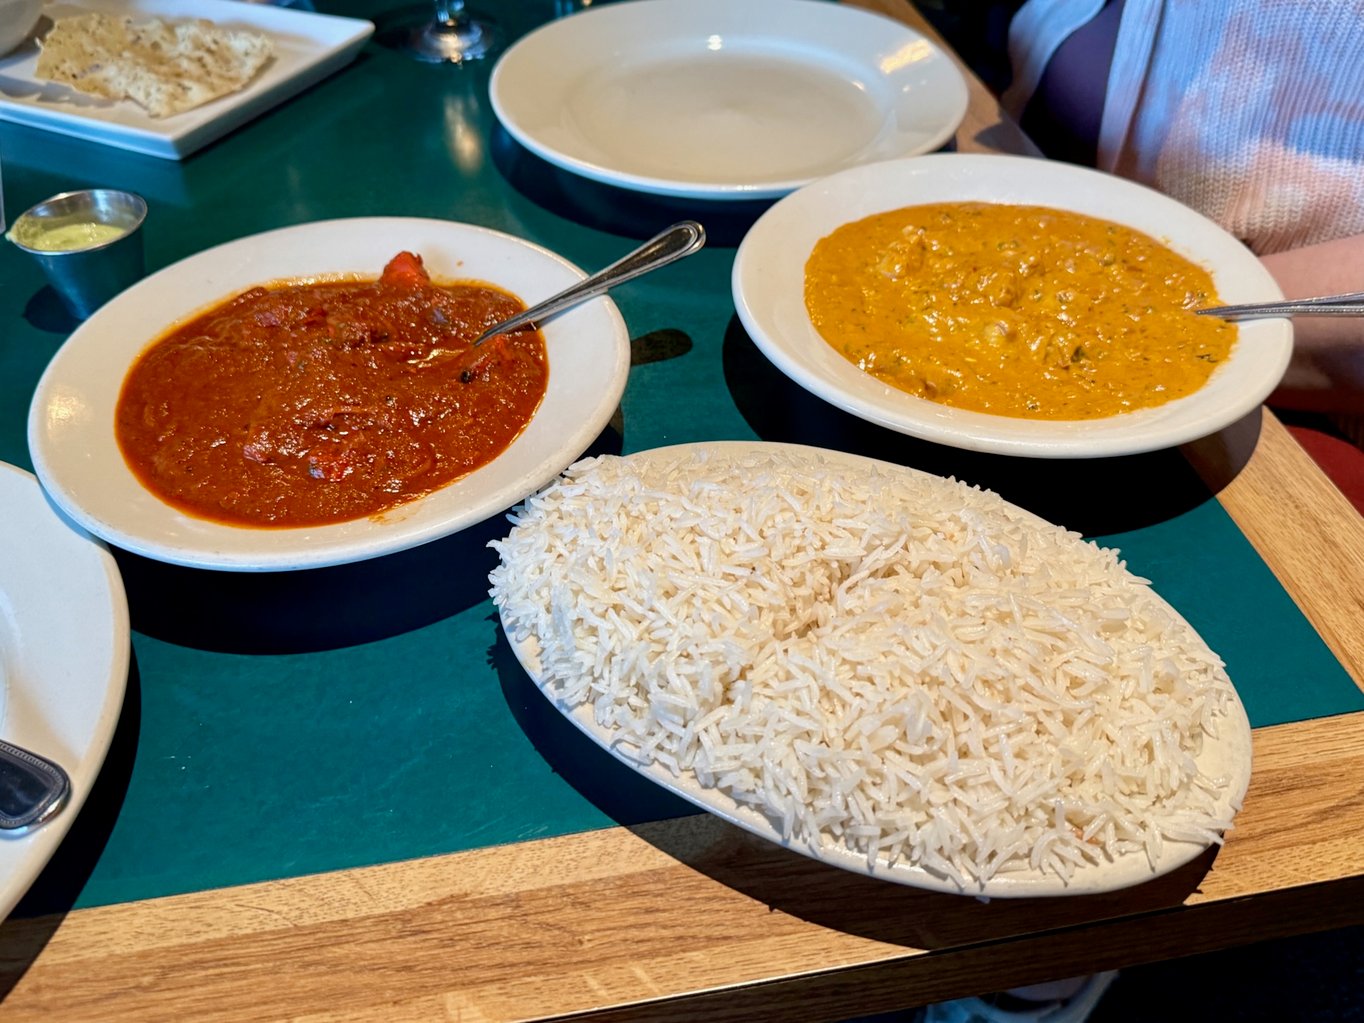 The Jaipur Indian Restaurant in Omaha